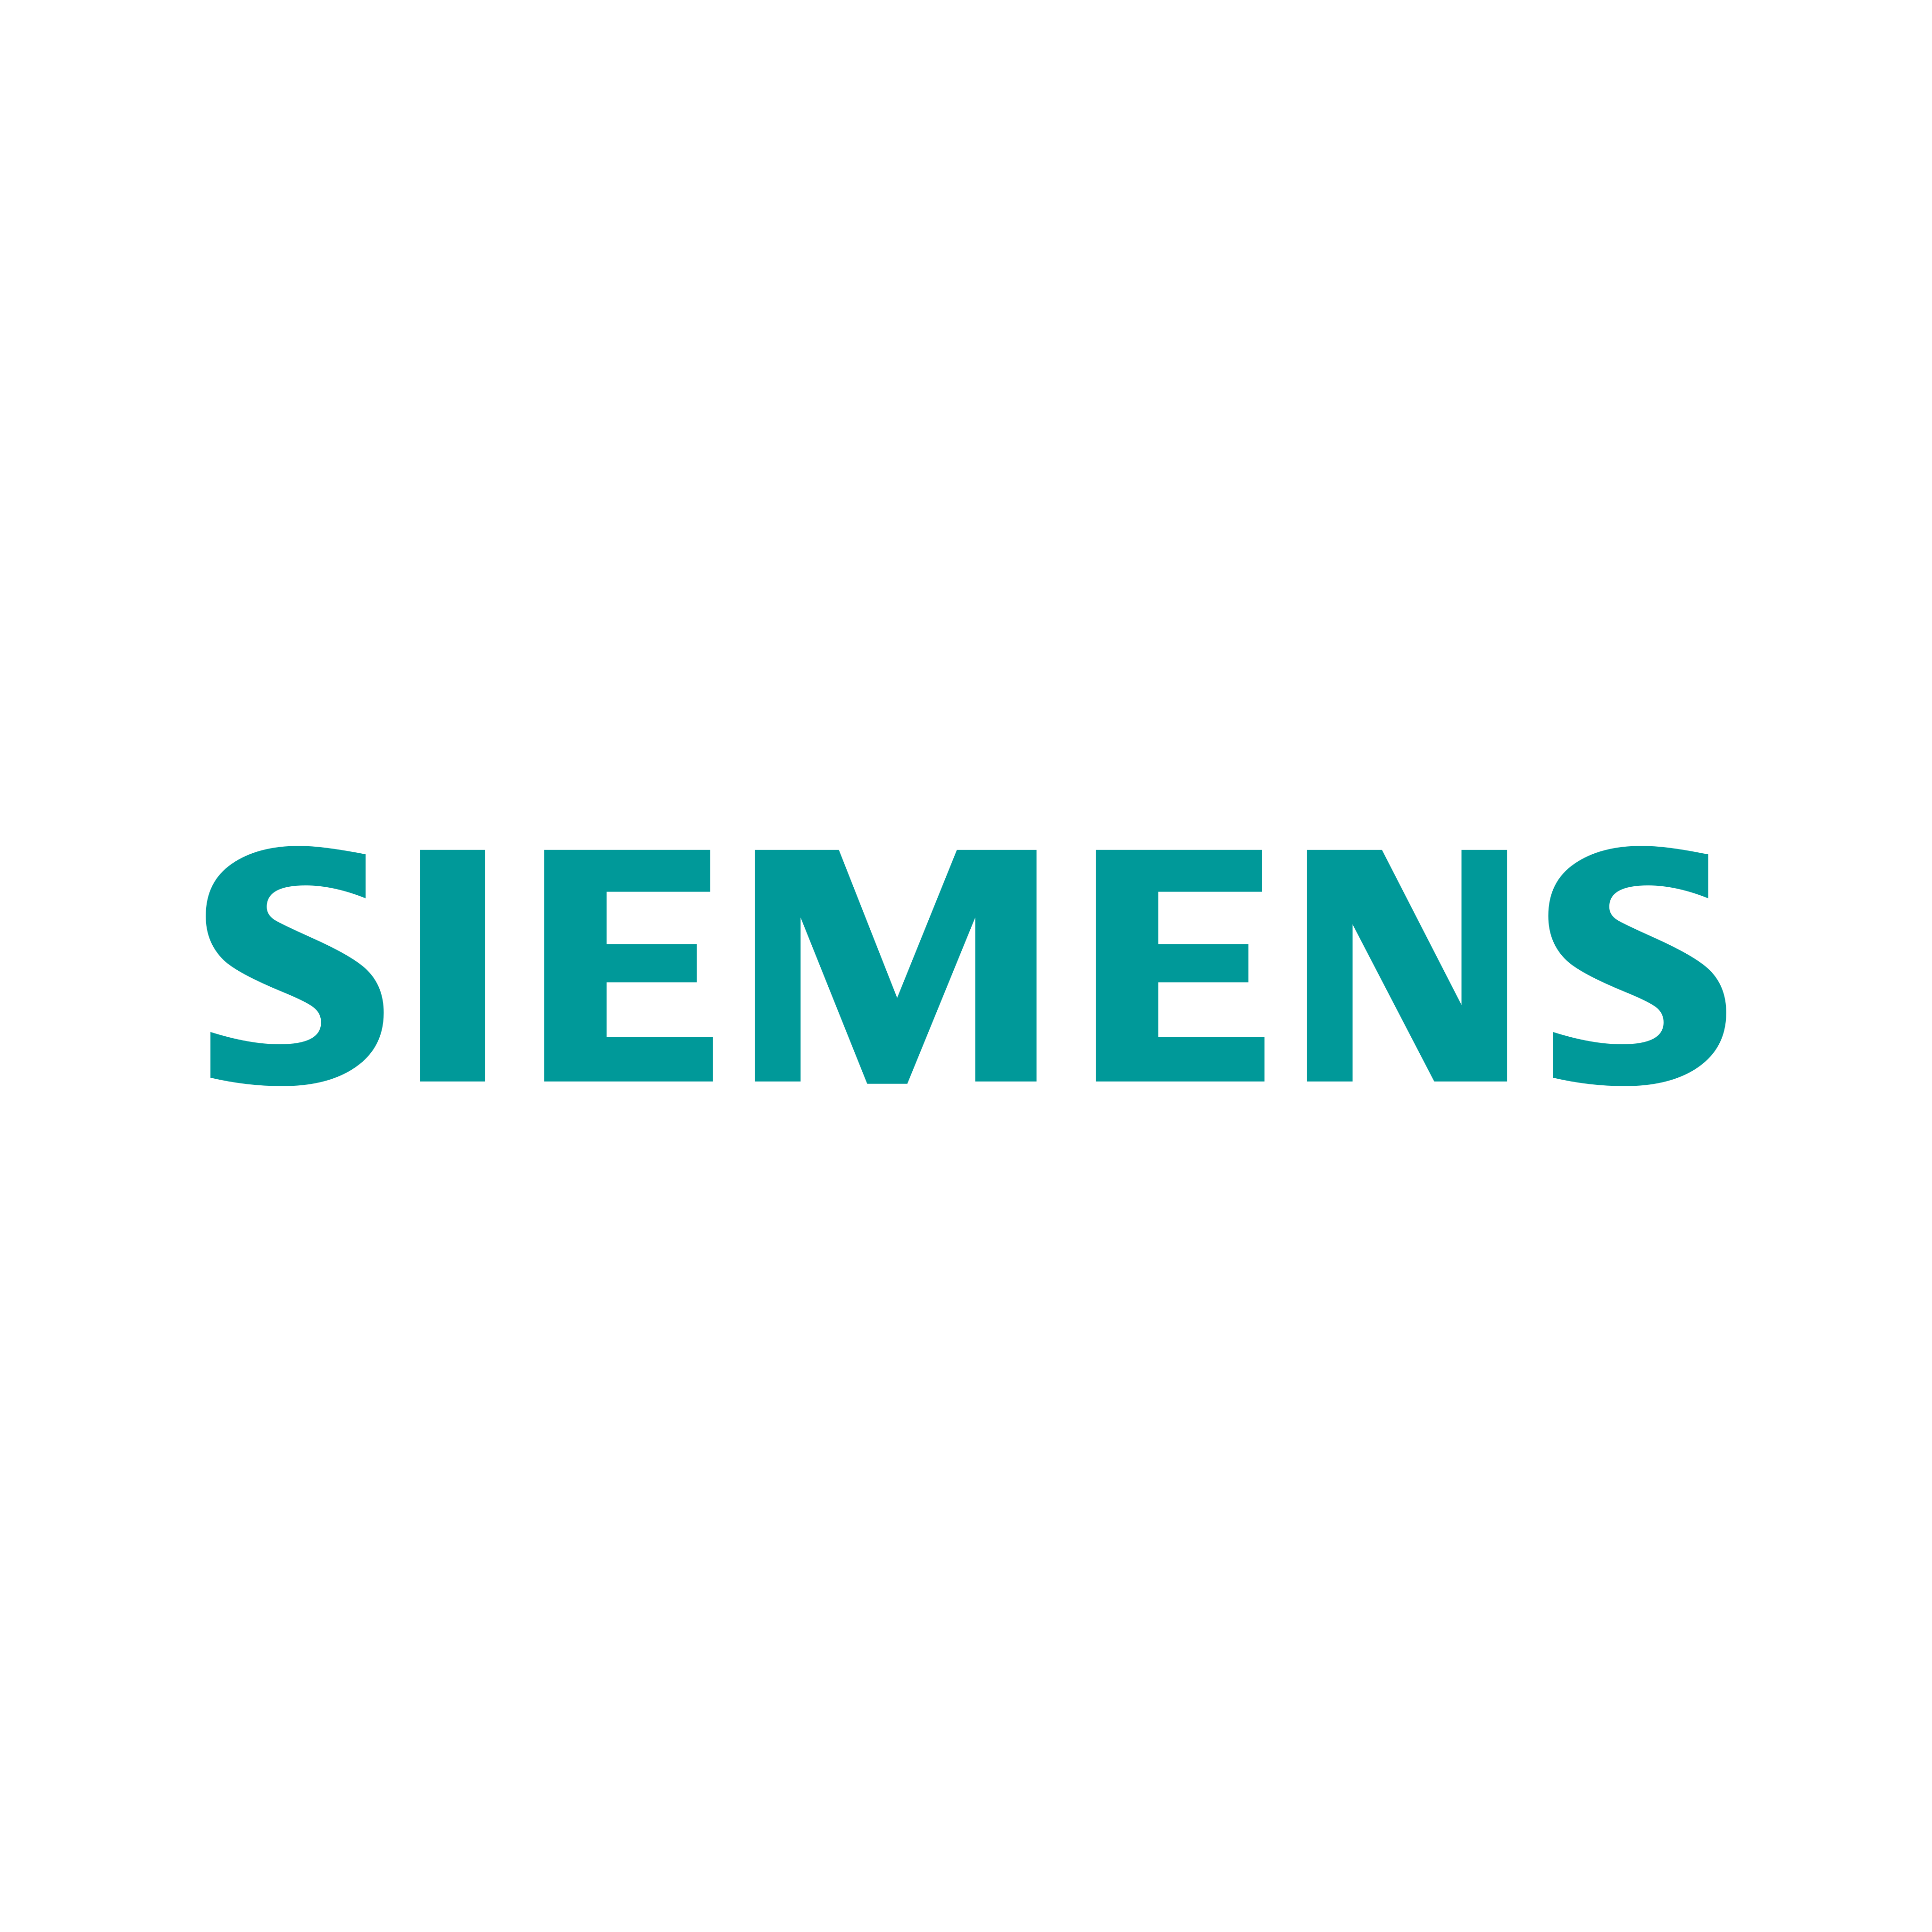 siemens logo 0 - Siemens Logo